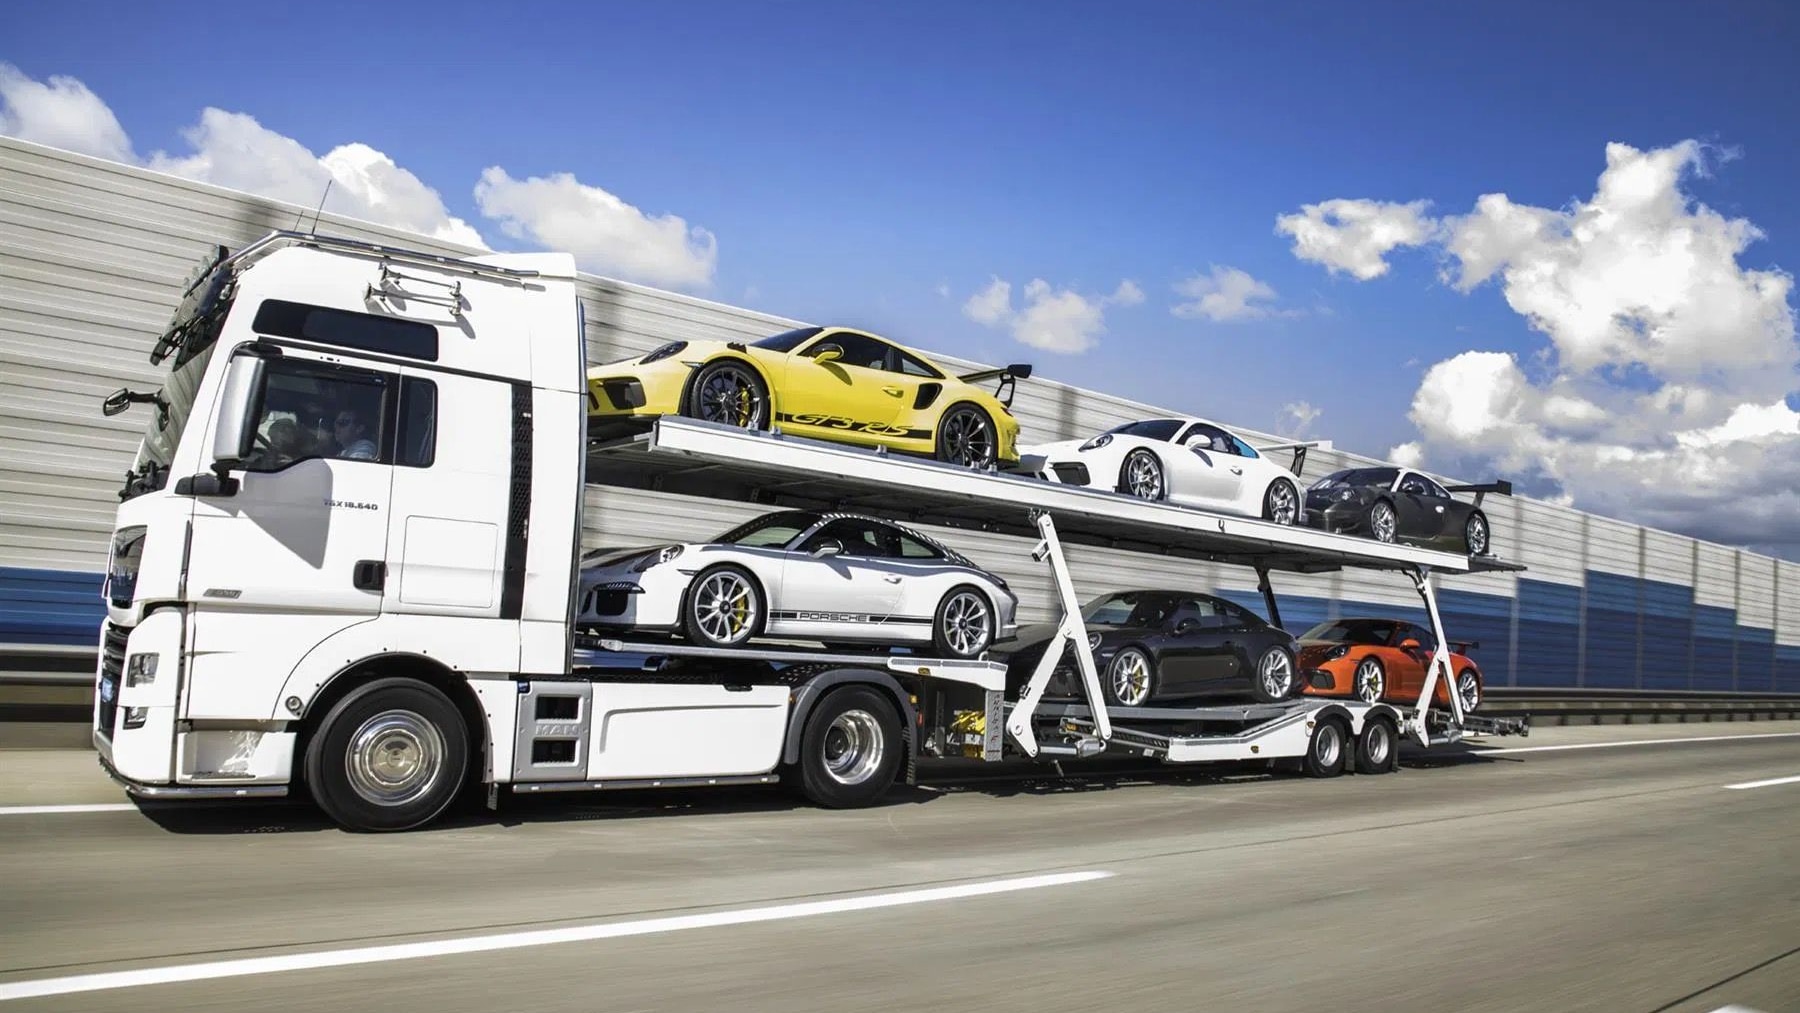 Porsche collection with transporter truck (photo via PistonHeads)